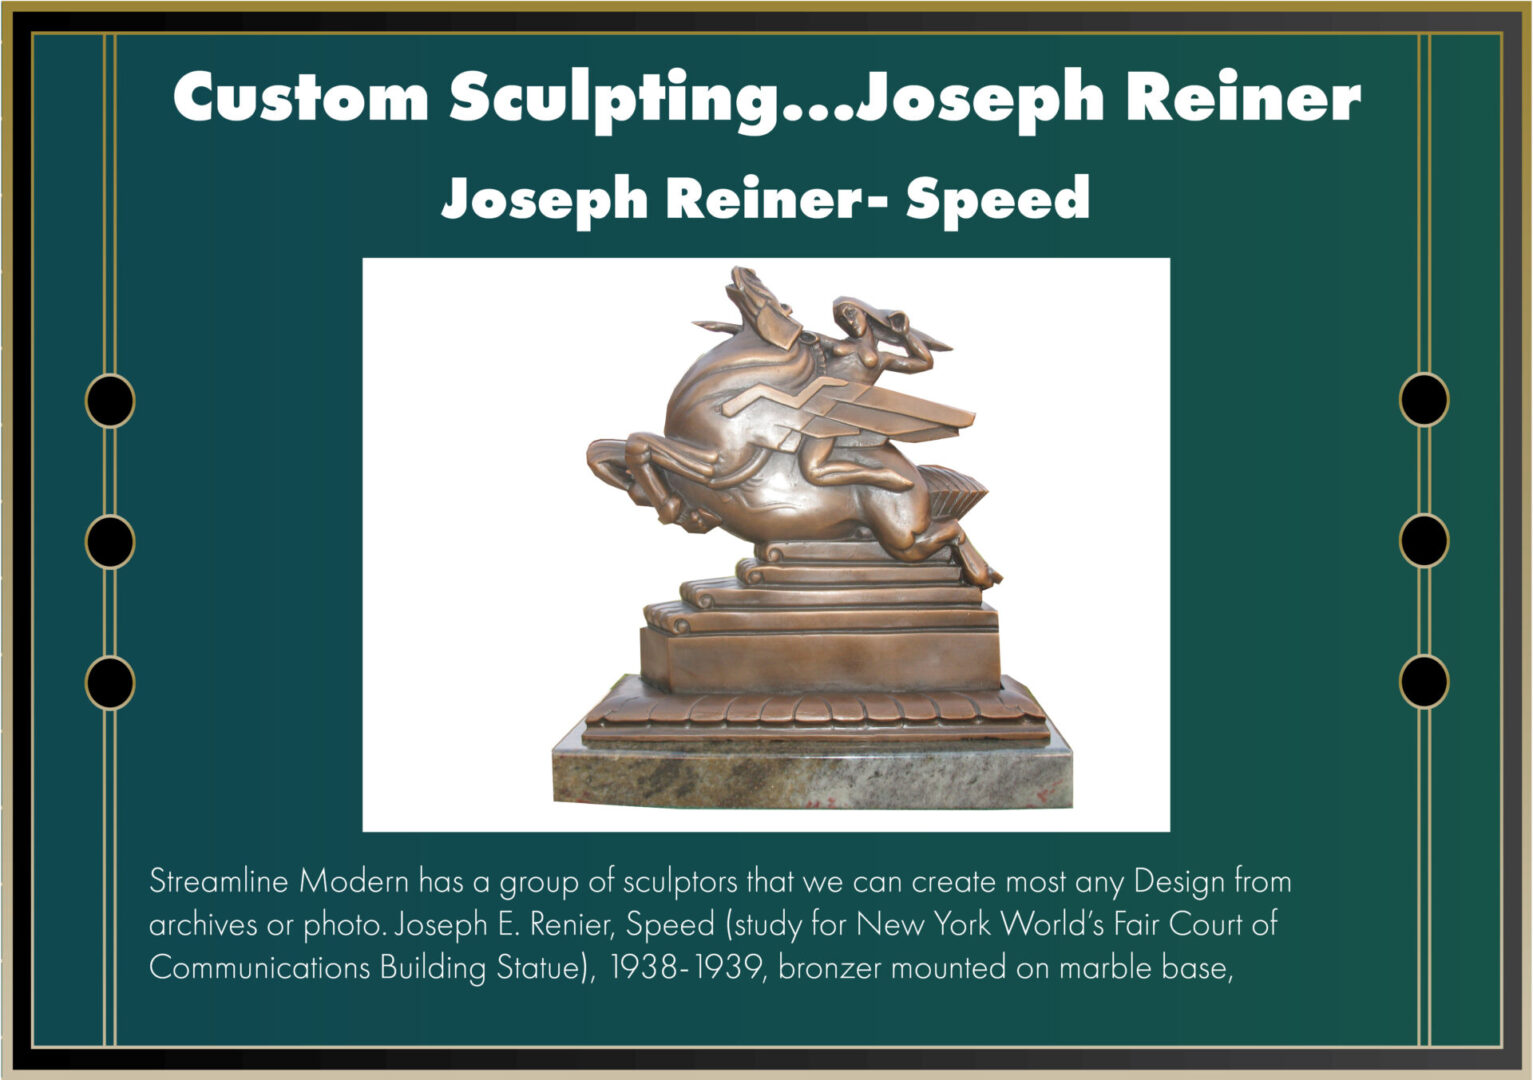 Custom Sculpture named Speed created by Joseph Reiner